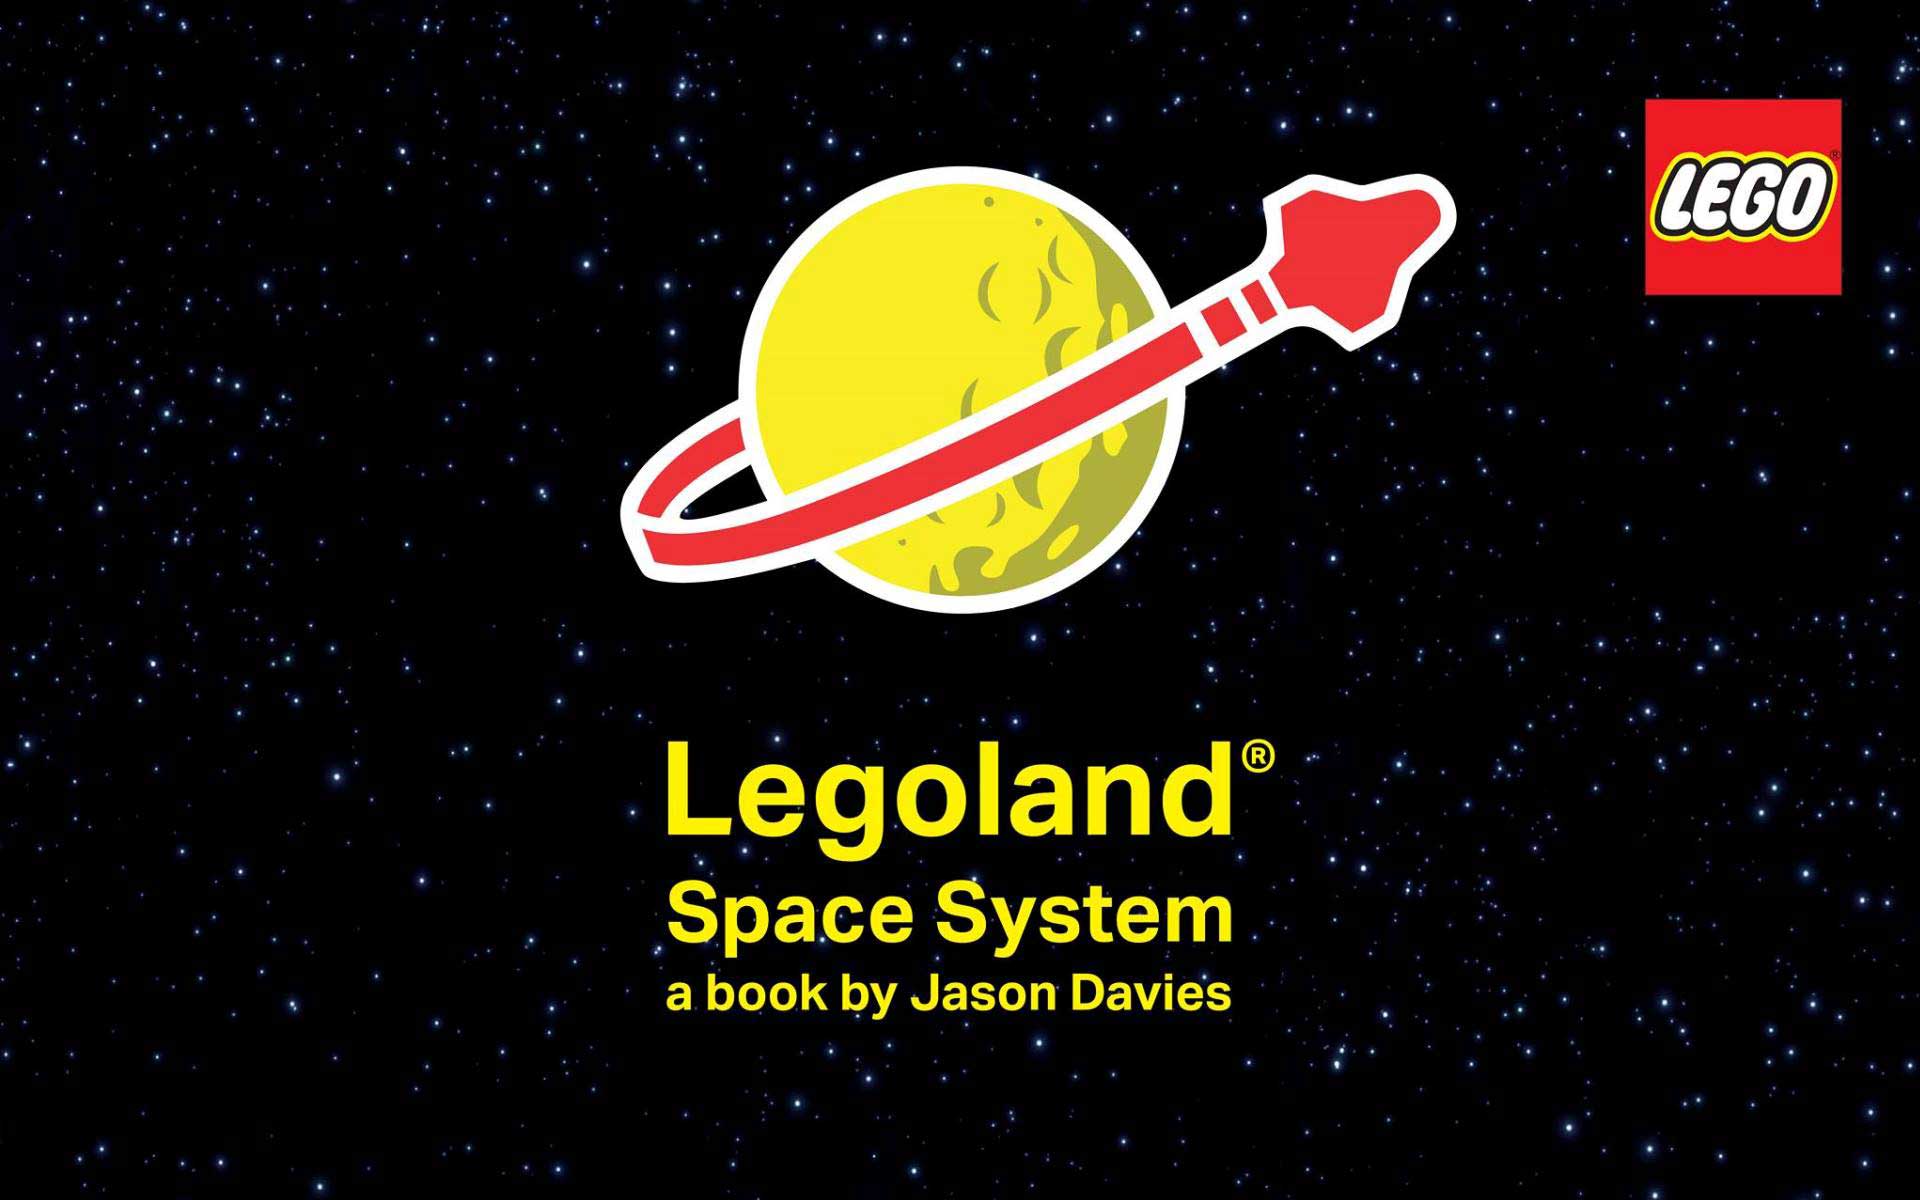 LEGOLAND Space System